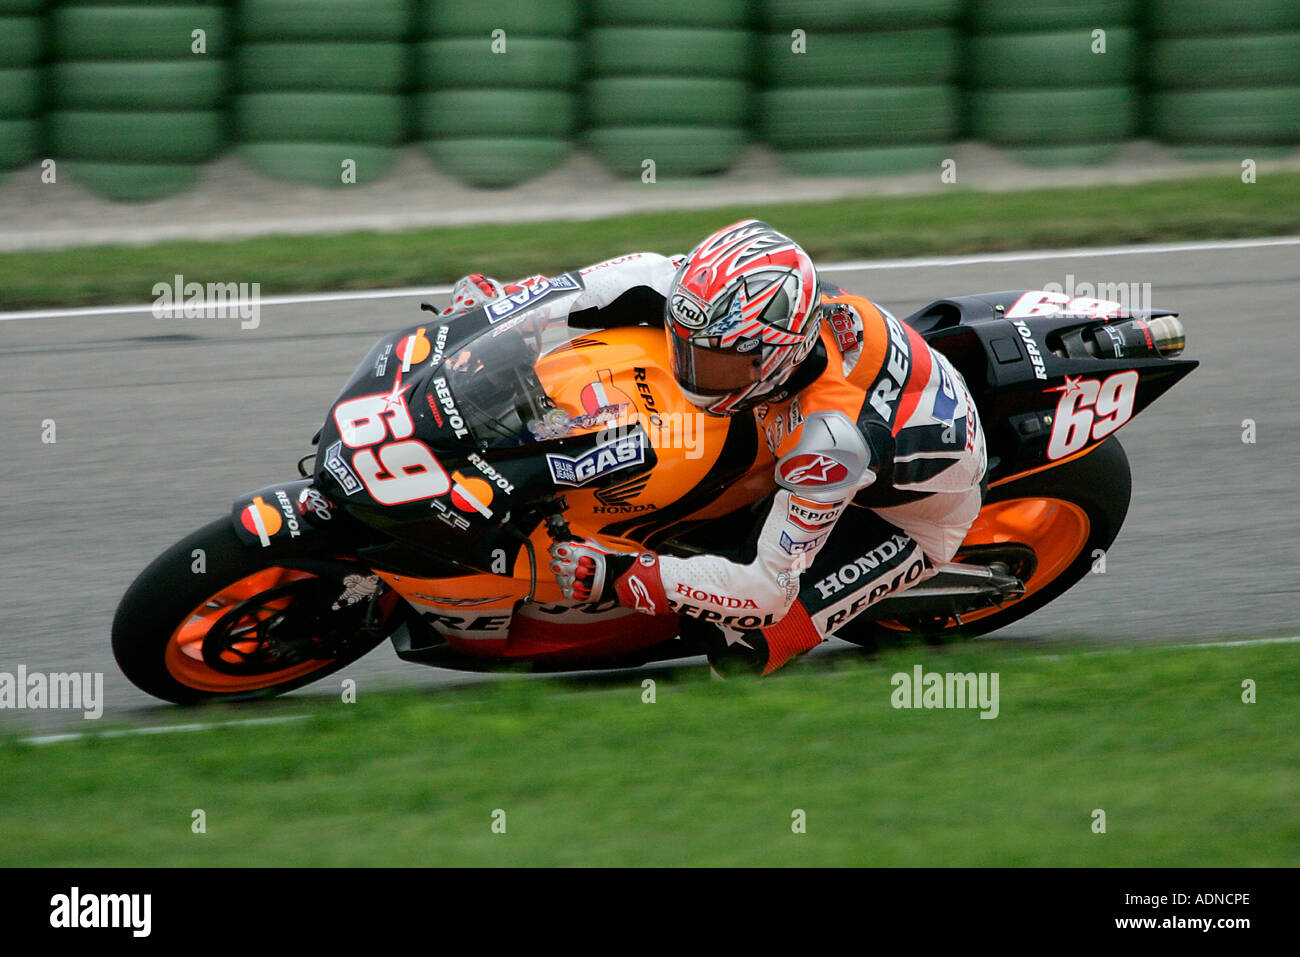 Nicky Hayden riding for Repsol Honda in 2005 Moto GP championship at  Valencia Stock Photo - Alamy